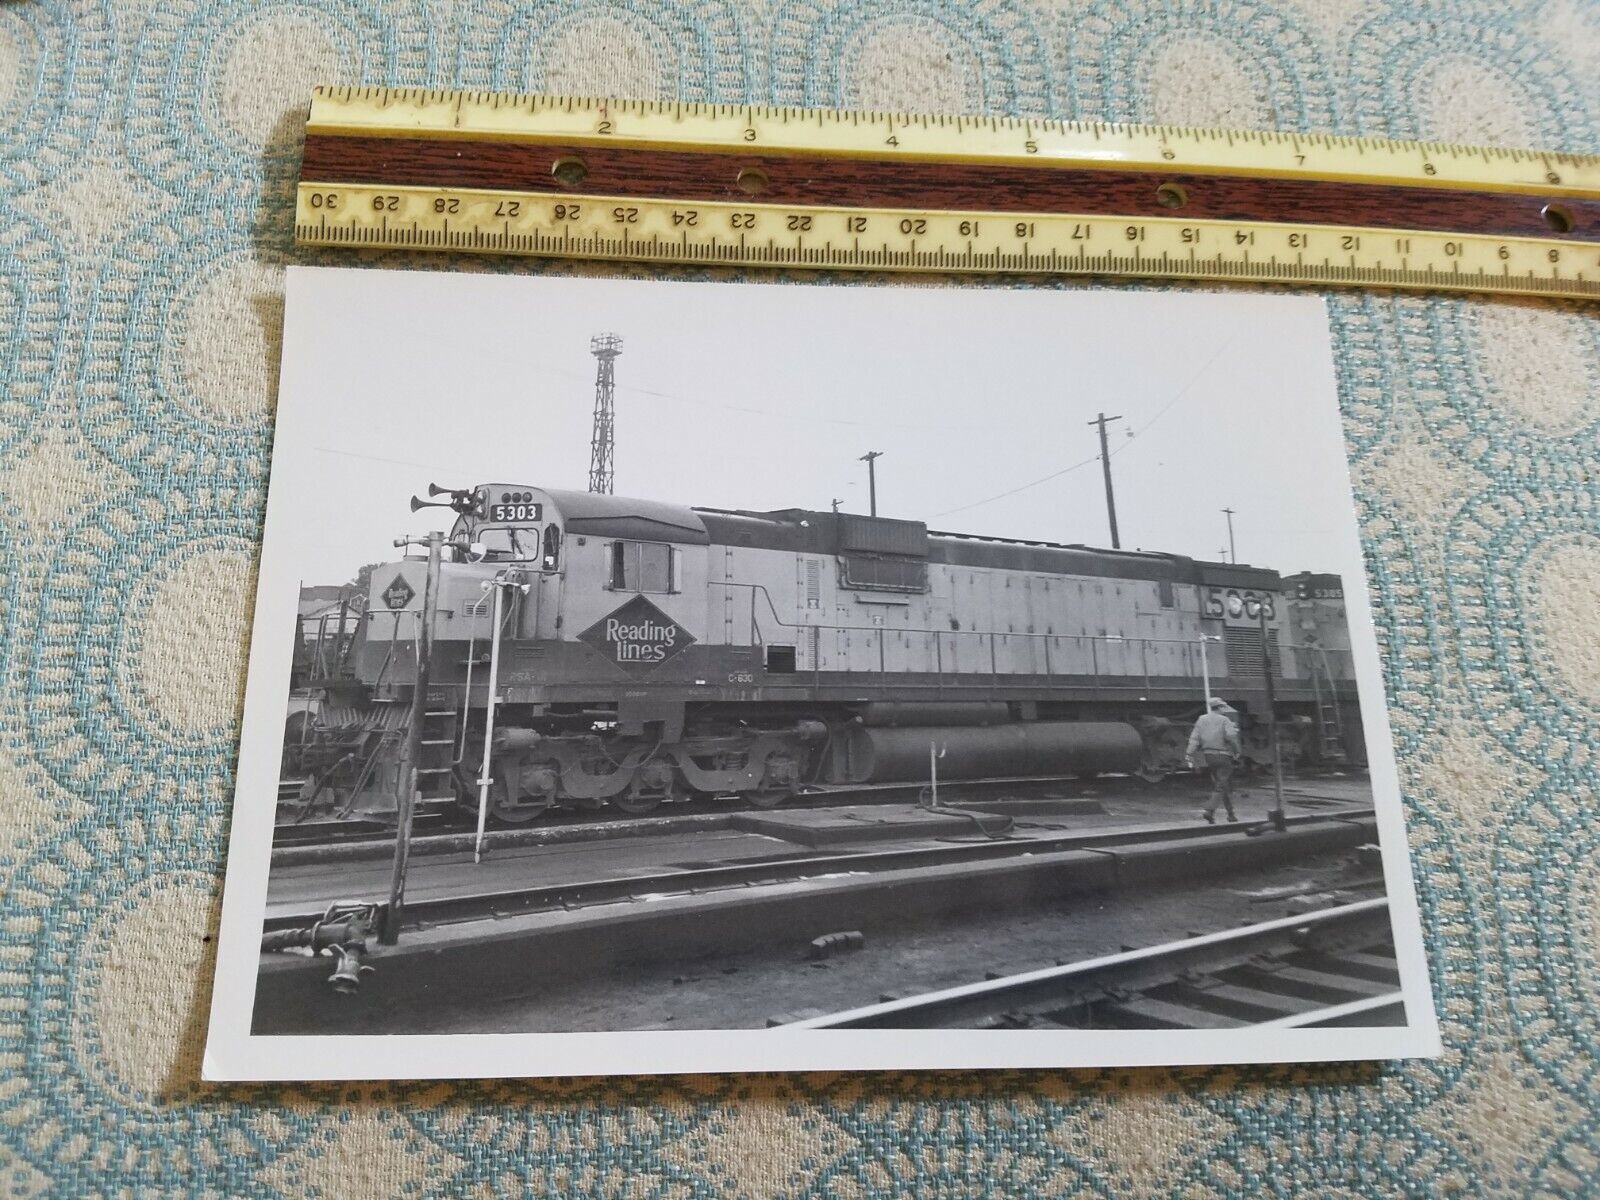 AACE 7X5 B&W Railroad Train Locomotive Engine photo 5303 RDG READING LINES